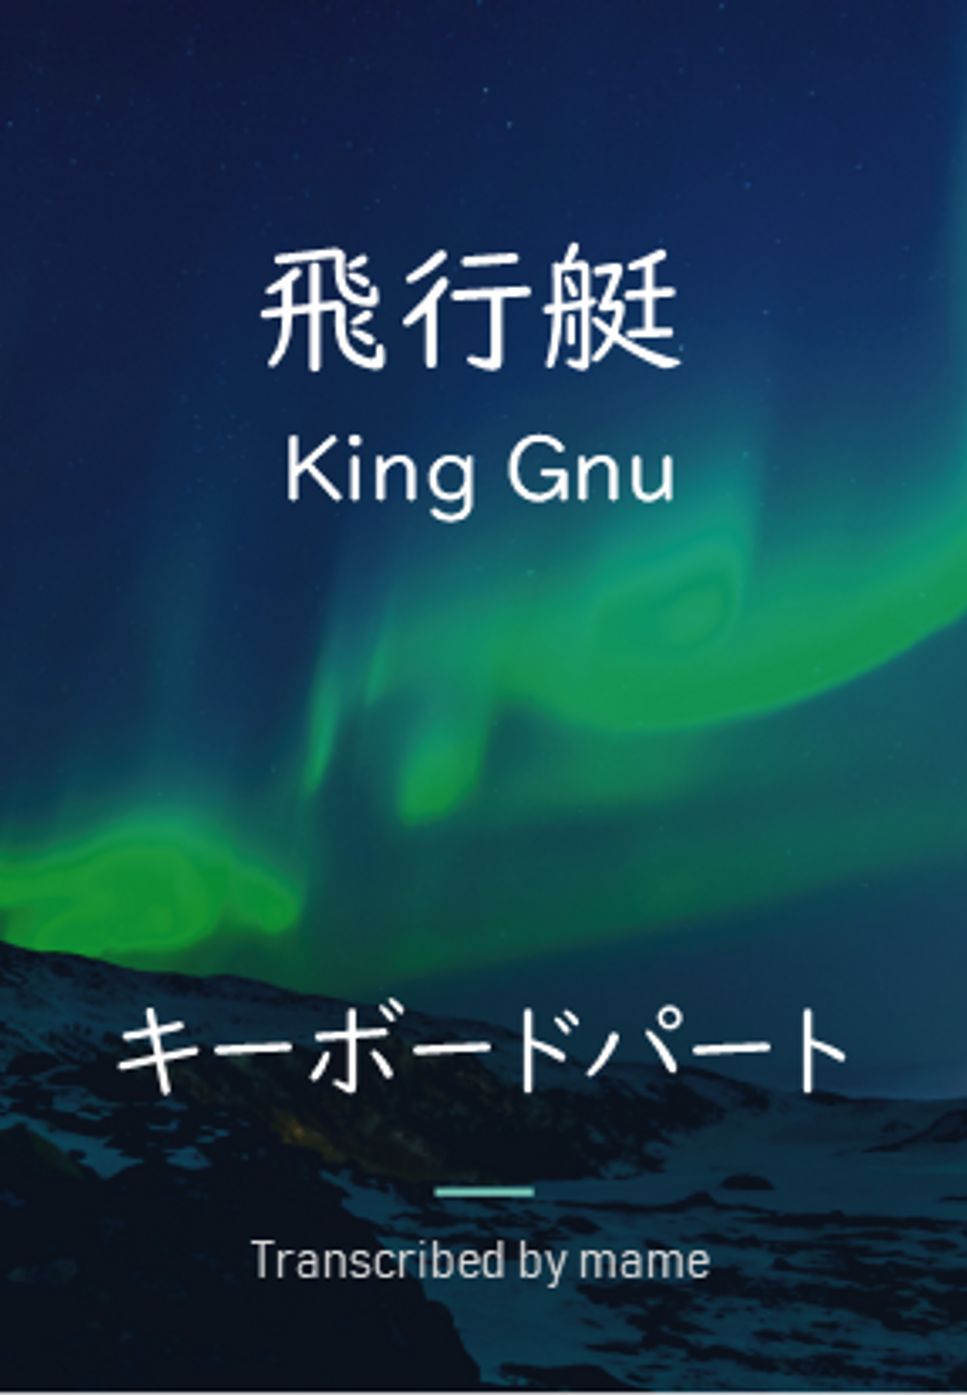 King Gnu - 飛行艇 (keyboard part) by mame